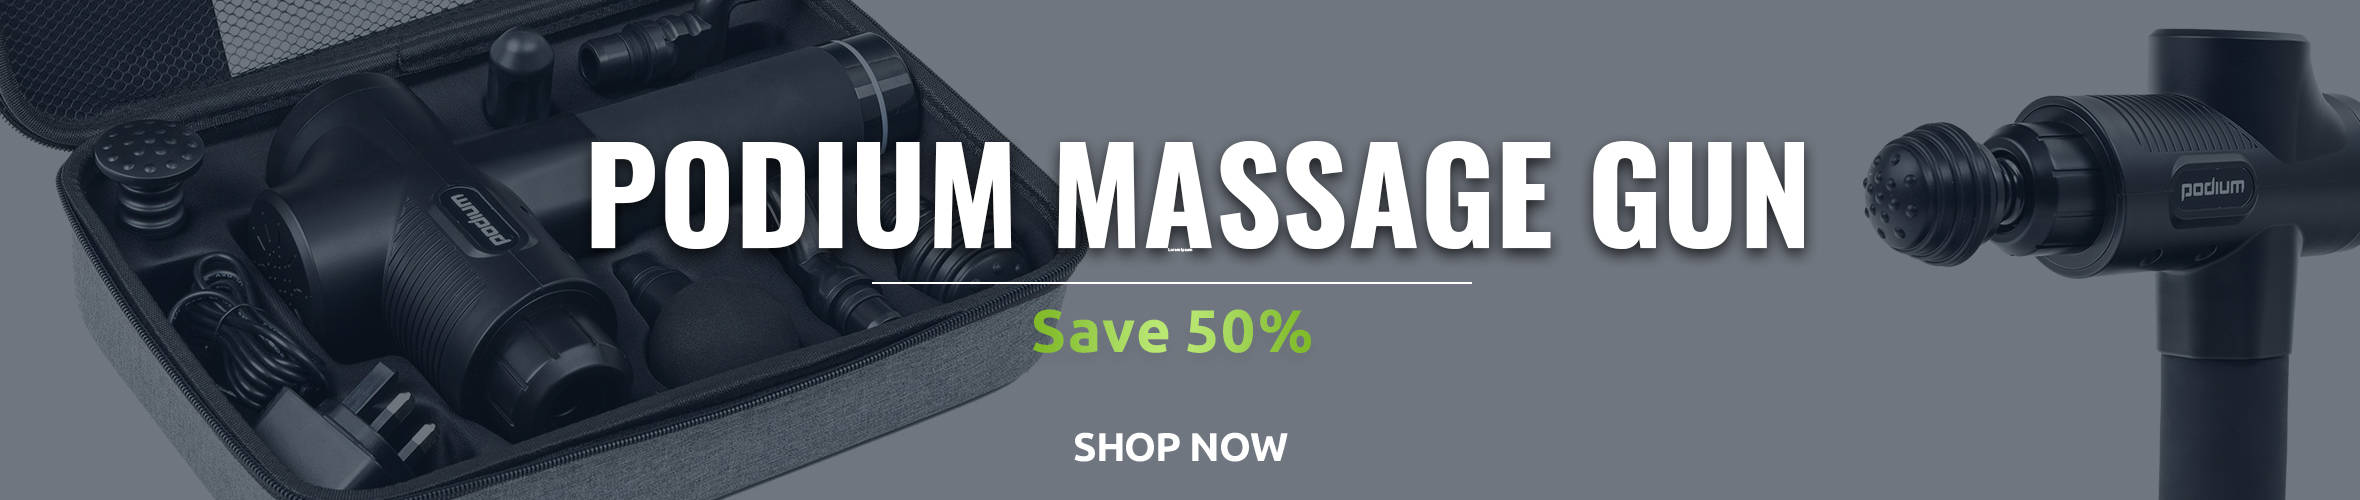 Podium Massage Gun - Save 50%